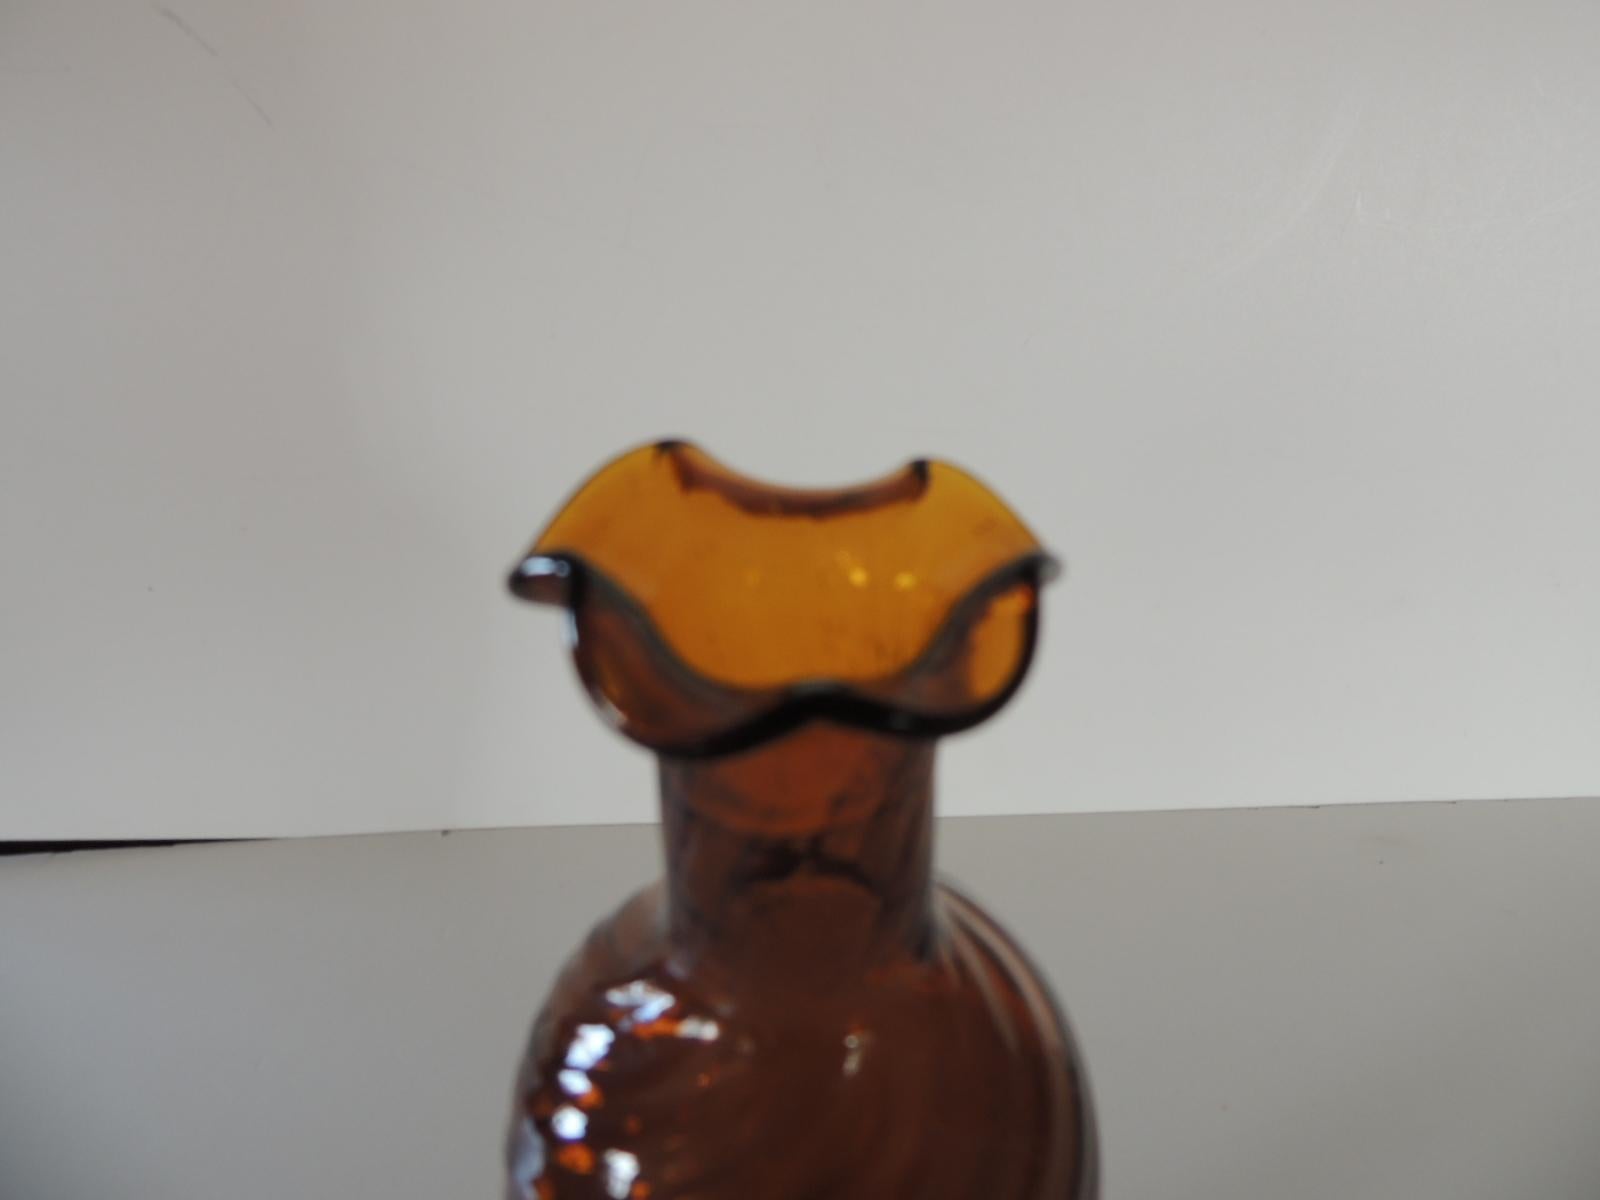 Hand blown Amber bud vase
Size: 3